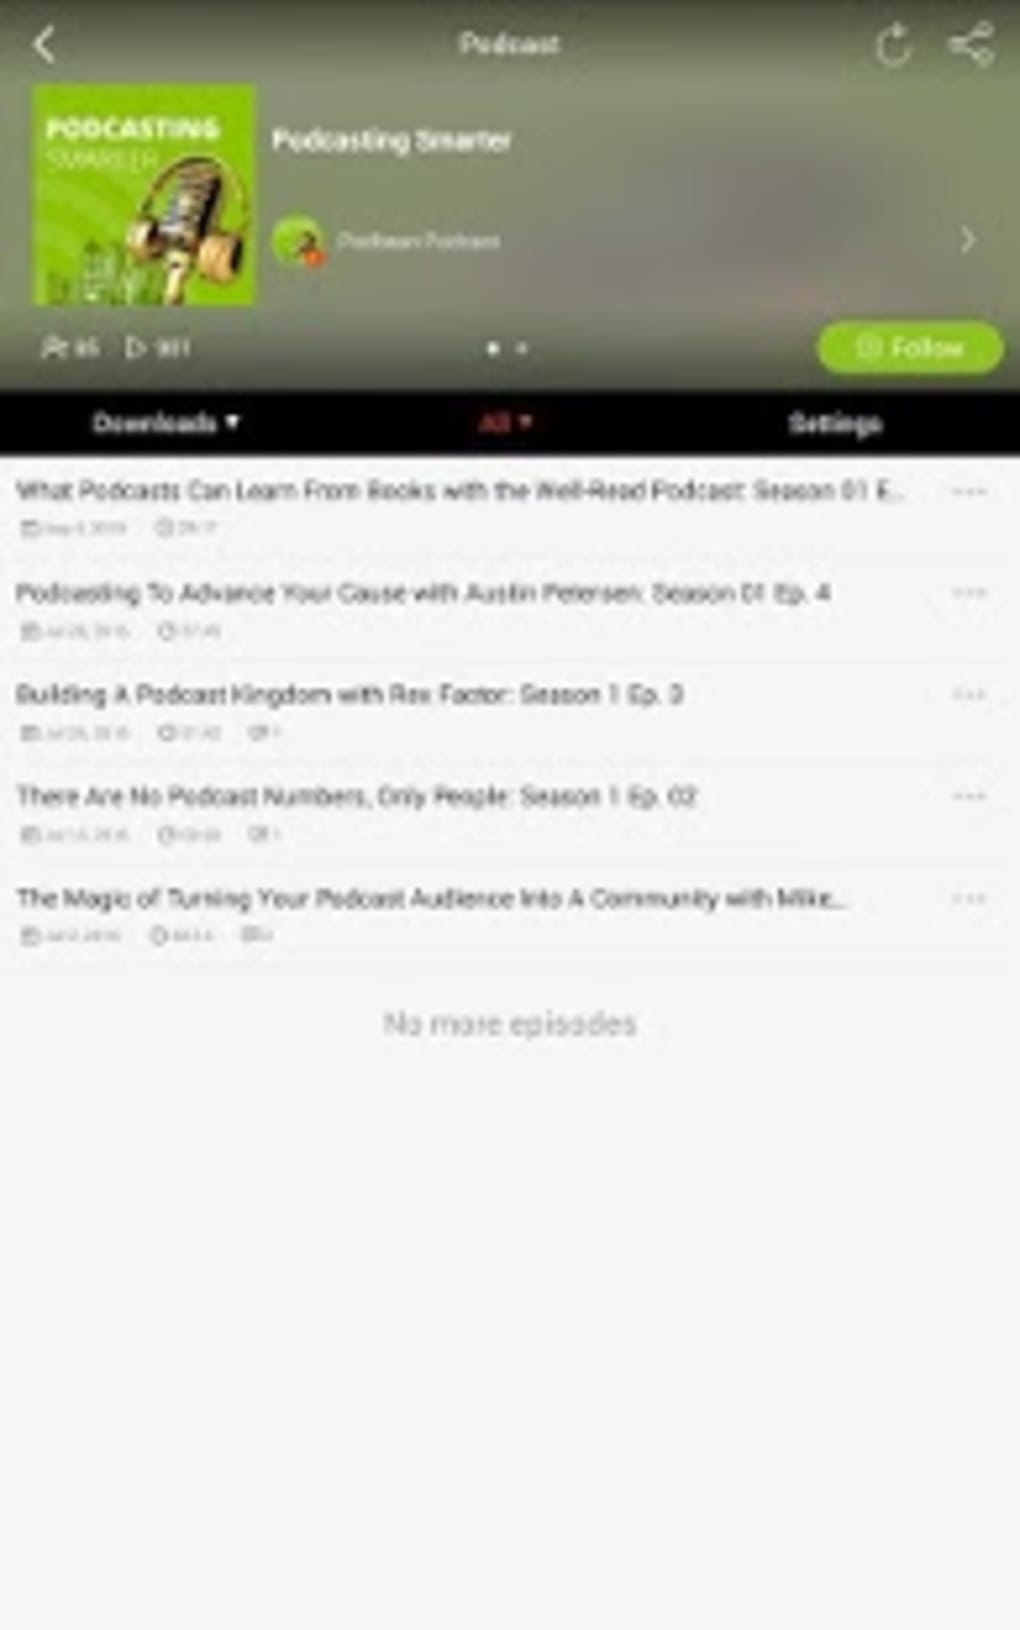 Papo Lendário Podcast  Free Listening on Podbean App